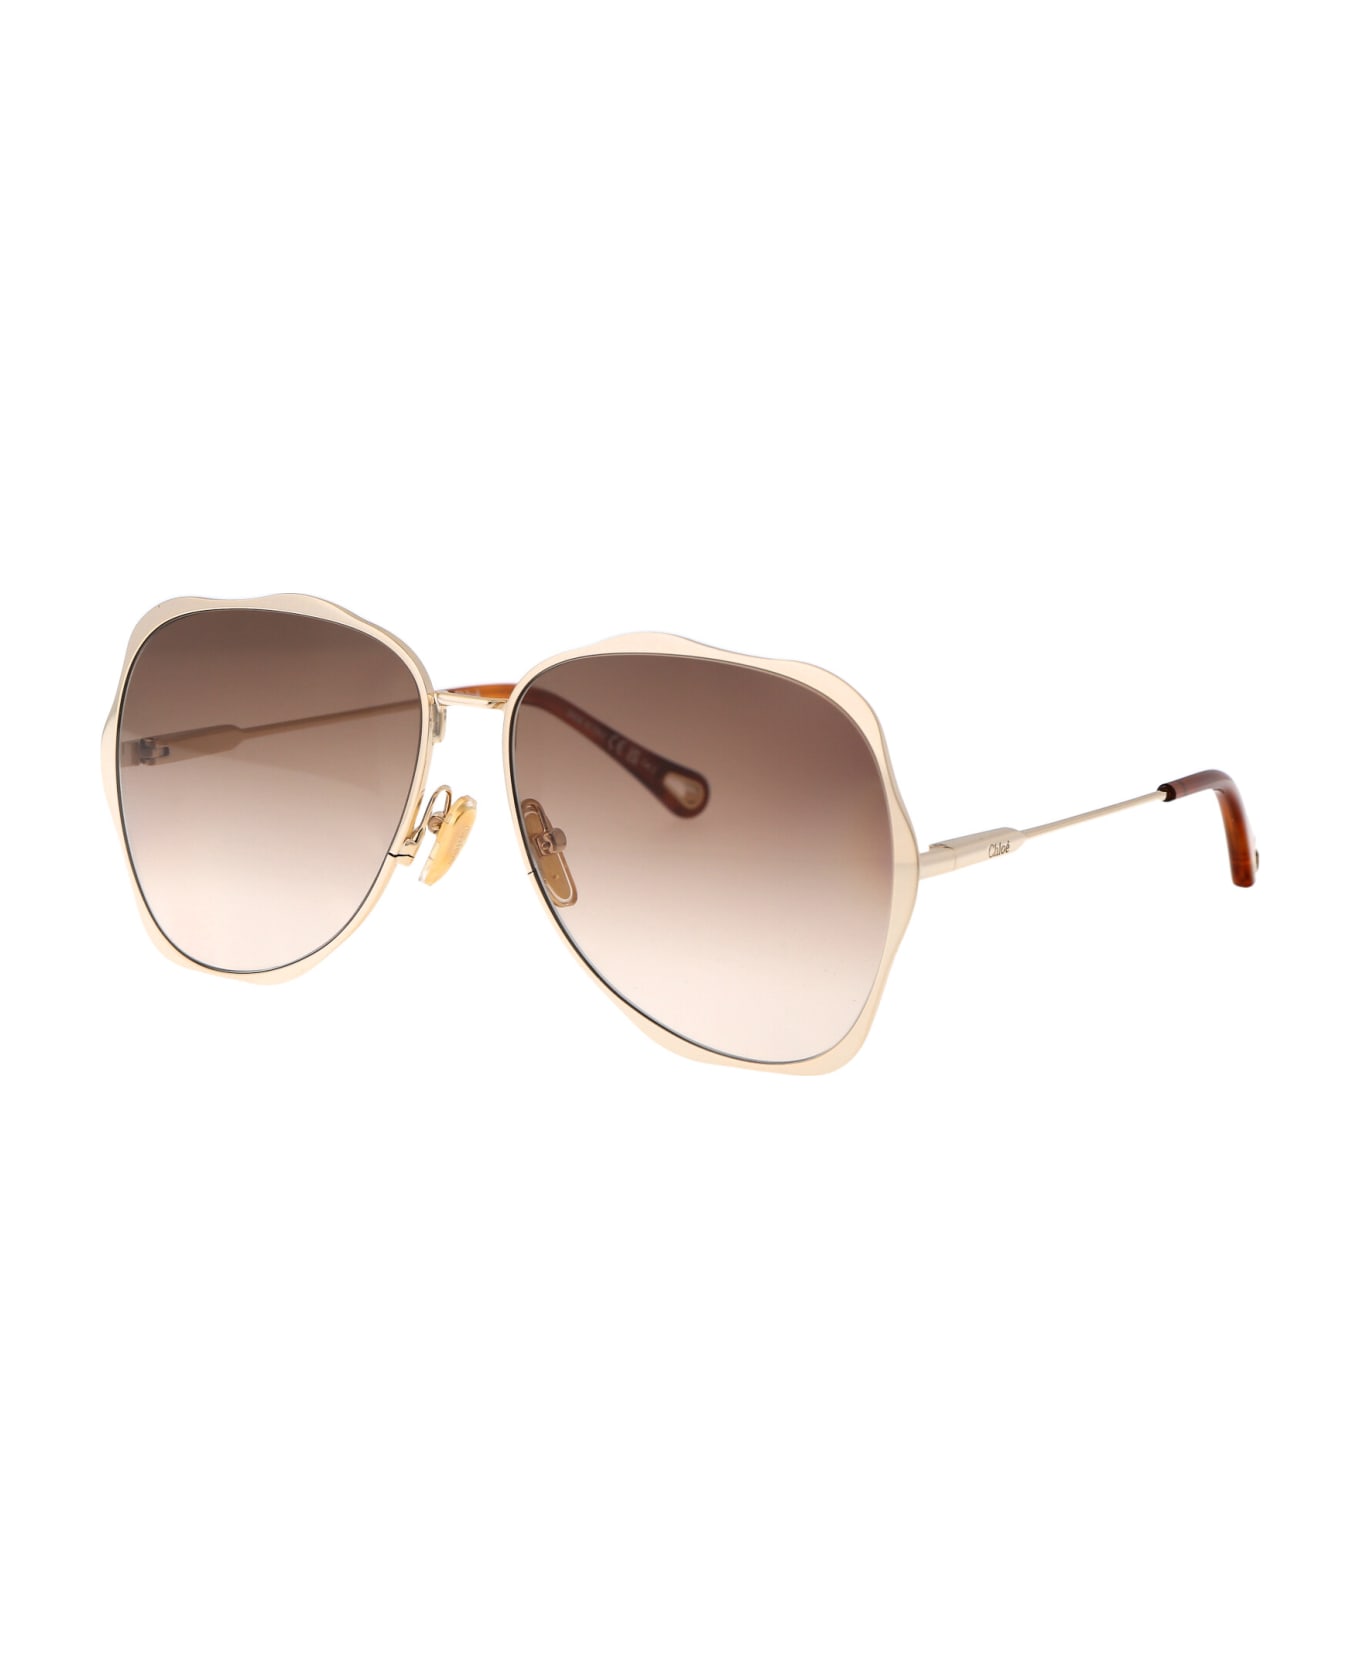 Chloé Eyewear Ch0177s Sunglasses - 002 GOLD GOLD BROWN